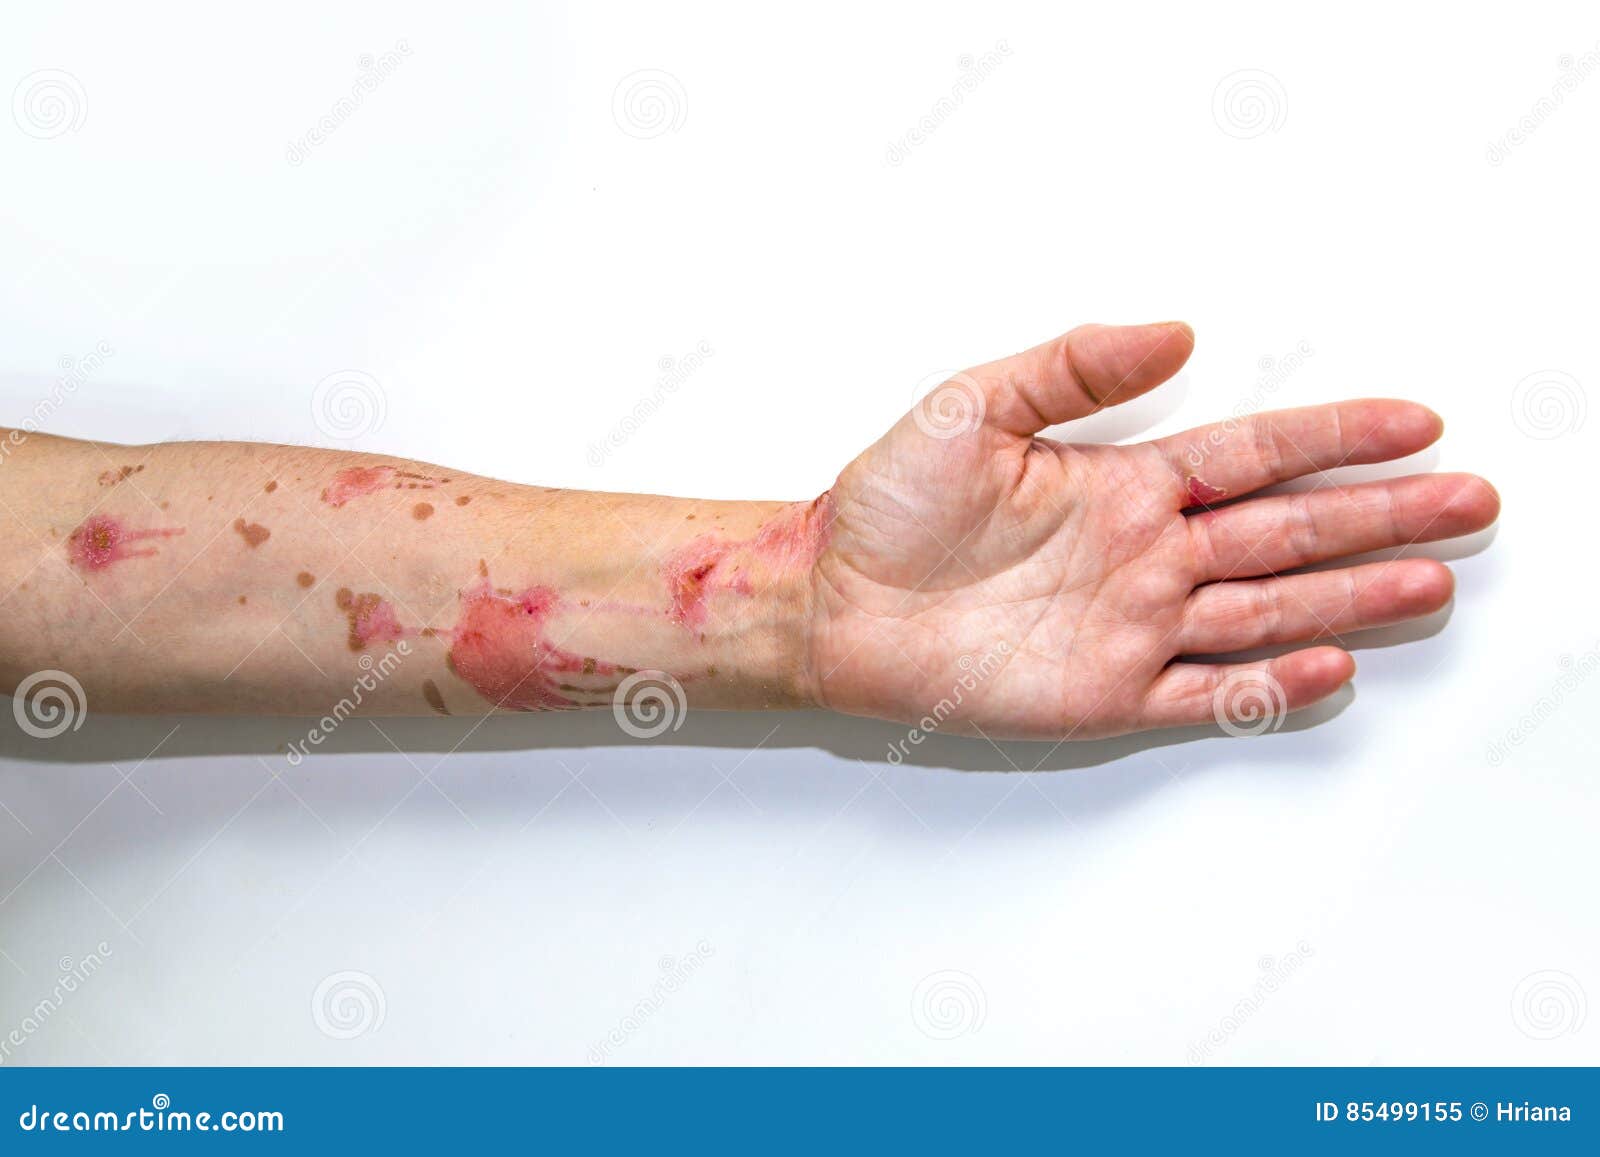 Skin Burns On Human Arm Stock Image Image Of Medicine 85499155